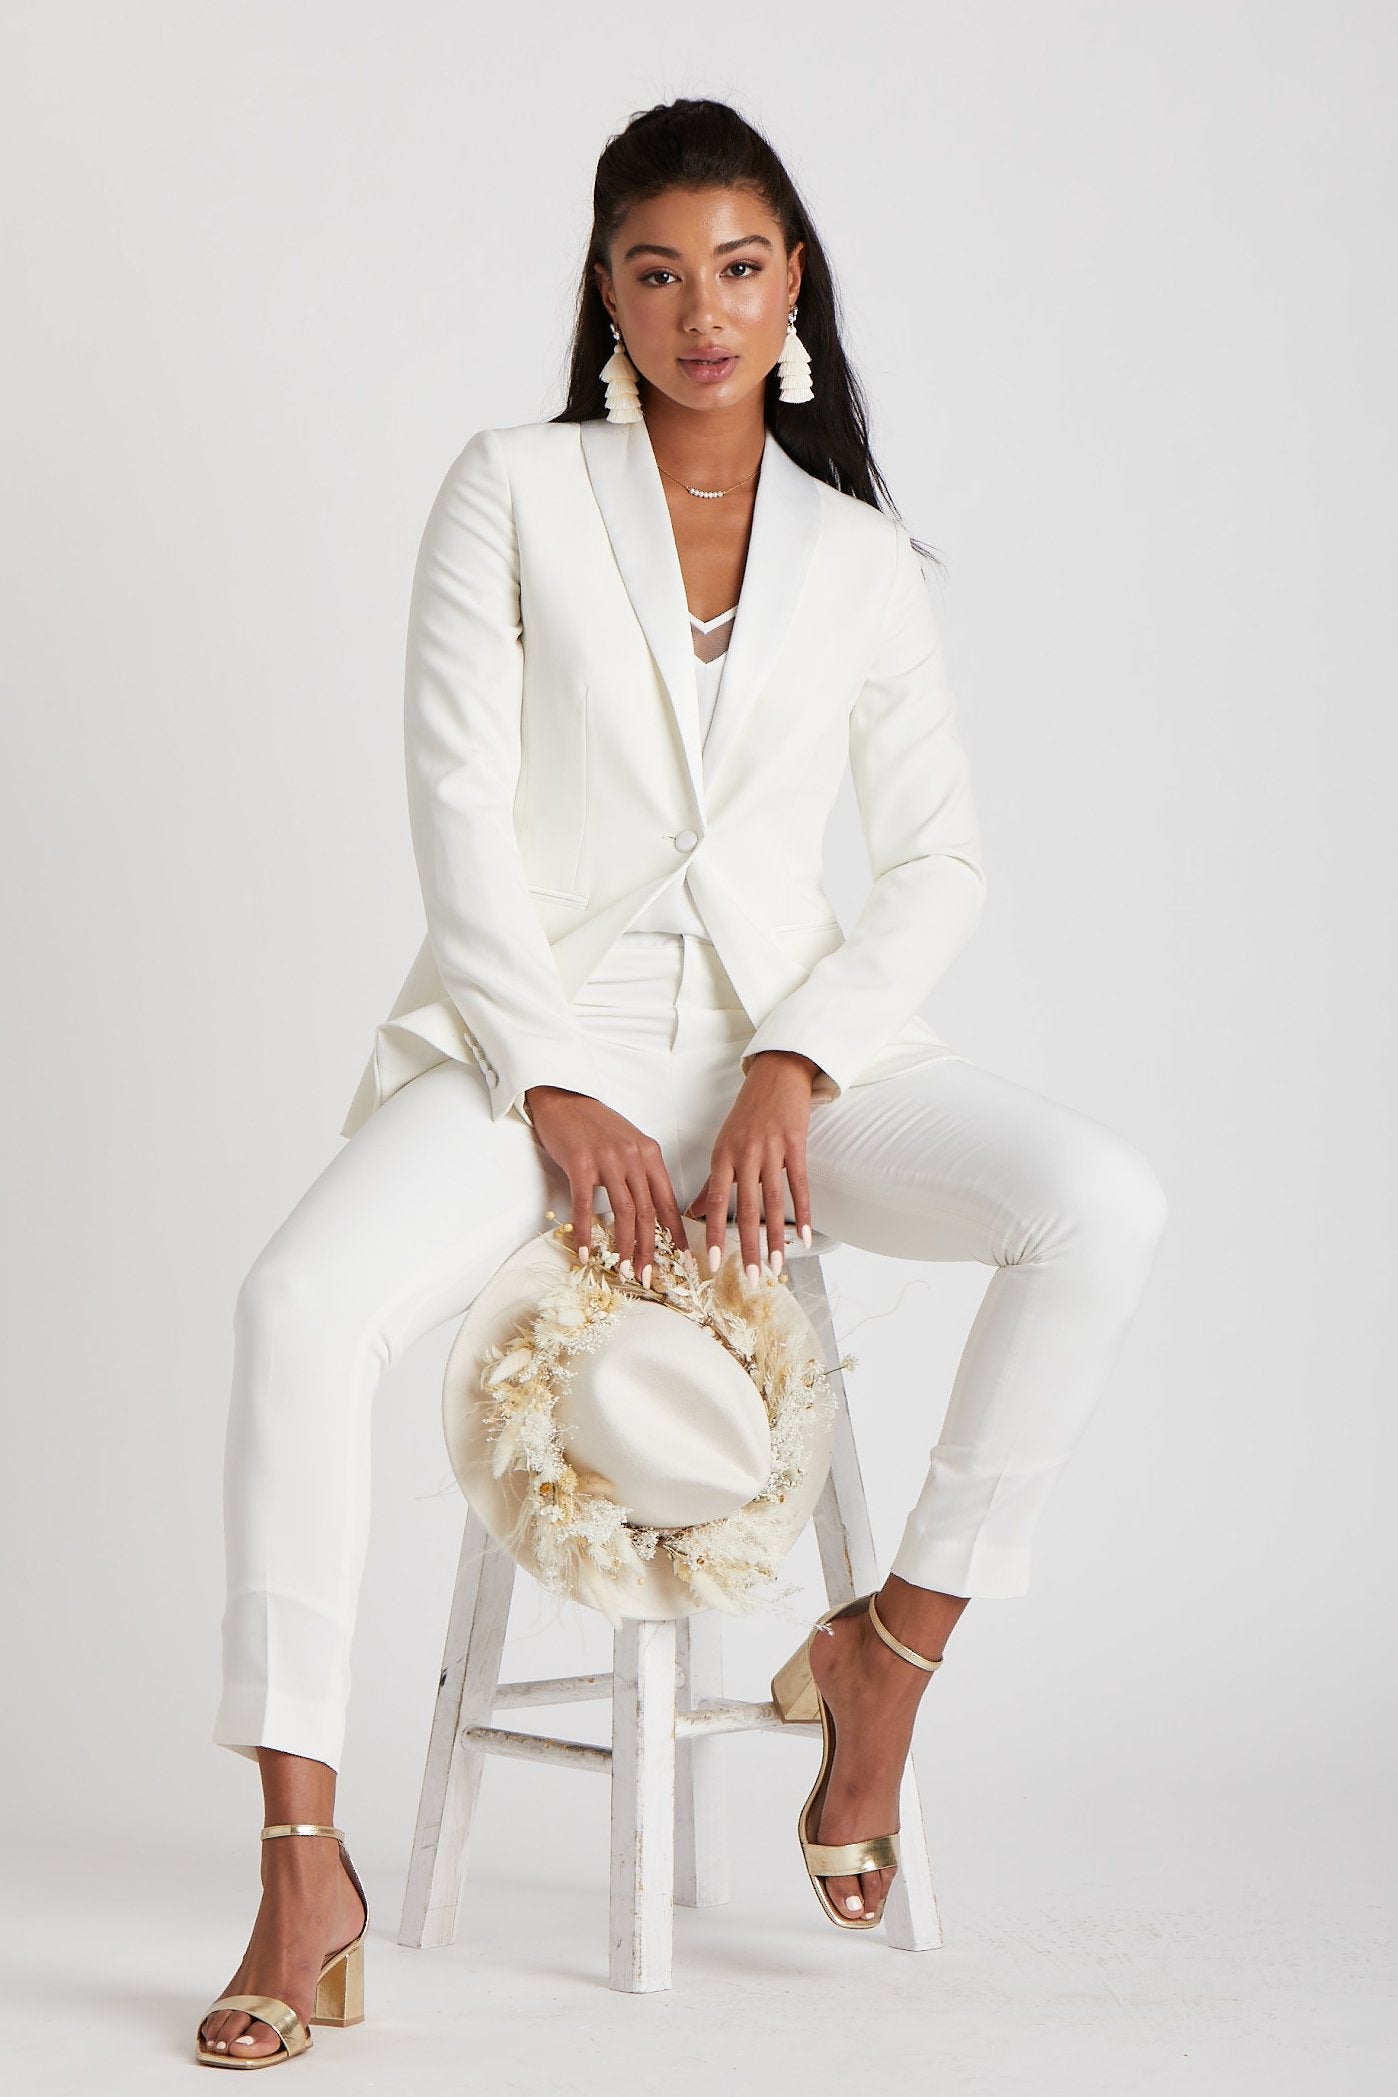 Women's White Tuxedo Pants by SuitShop